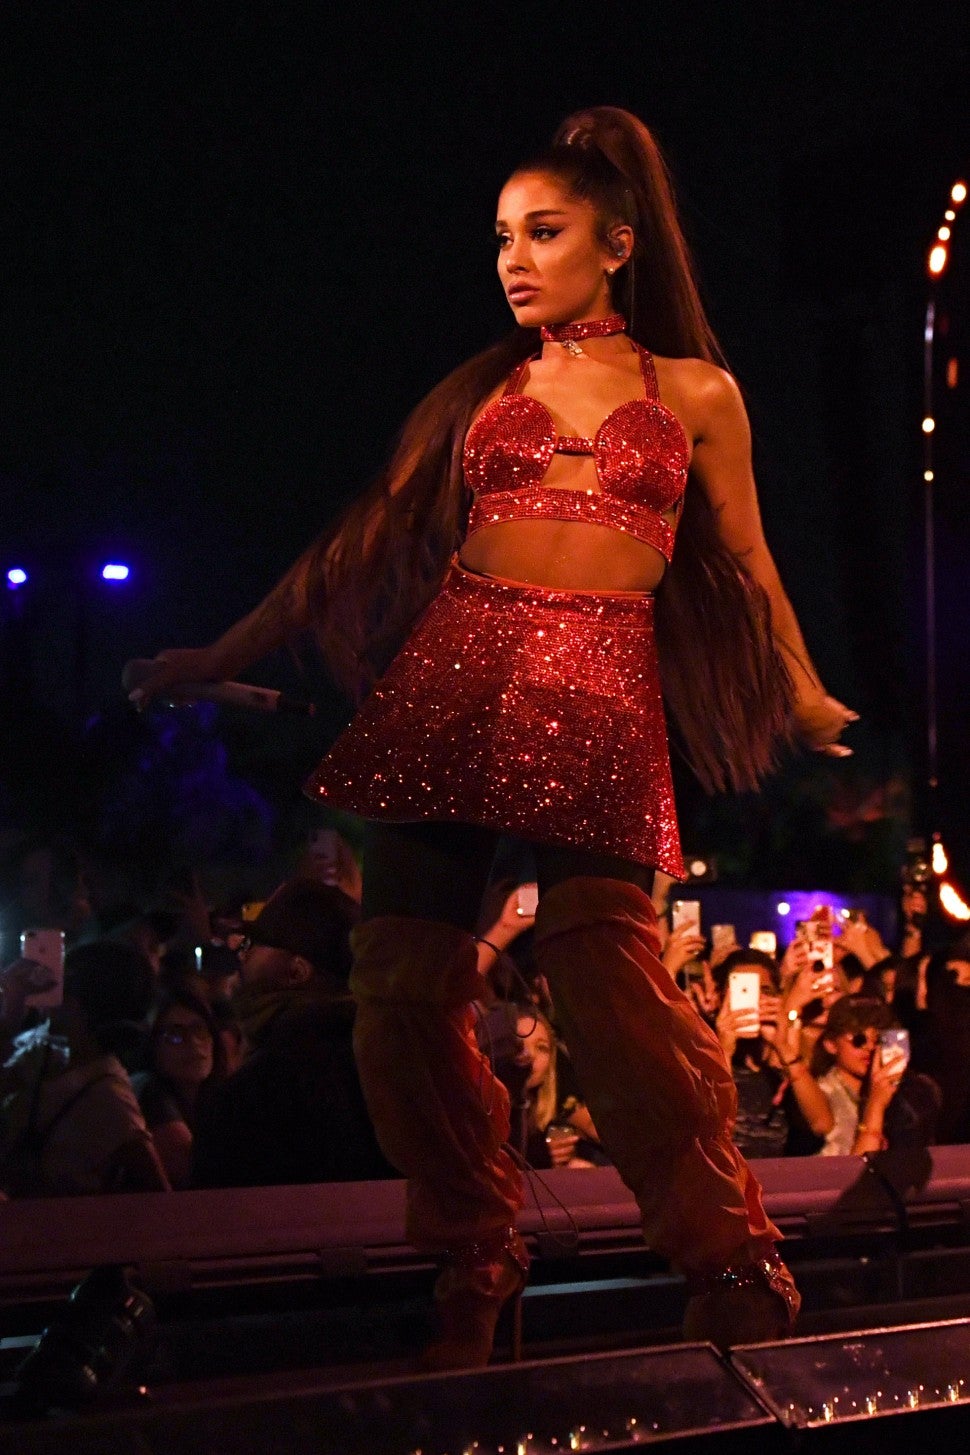 Ariana Grande sequin outfit at Coachella